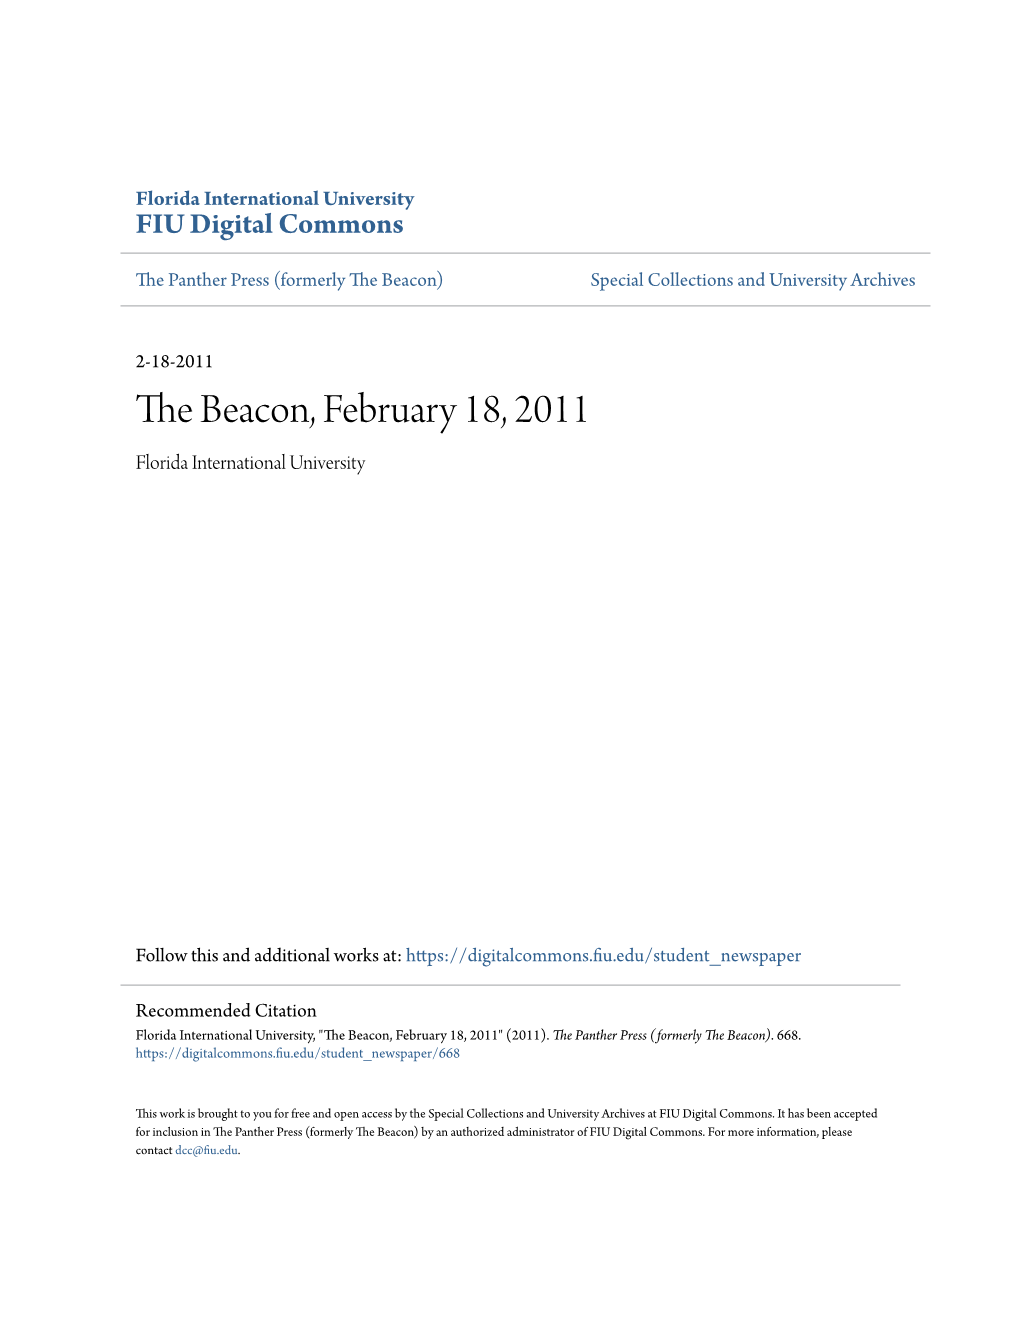 The Beacon, February 18, 2011 Florida International University